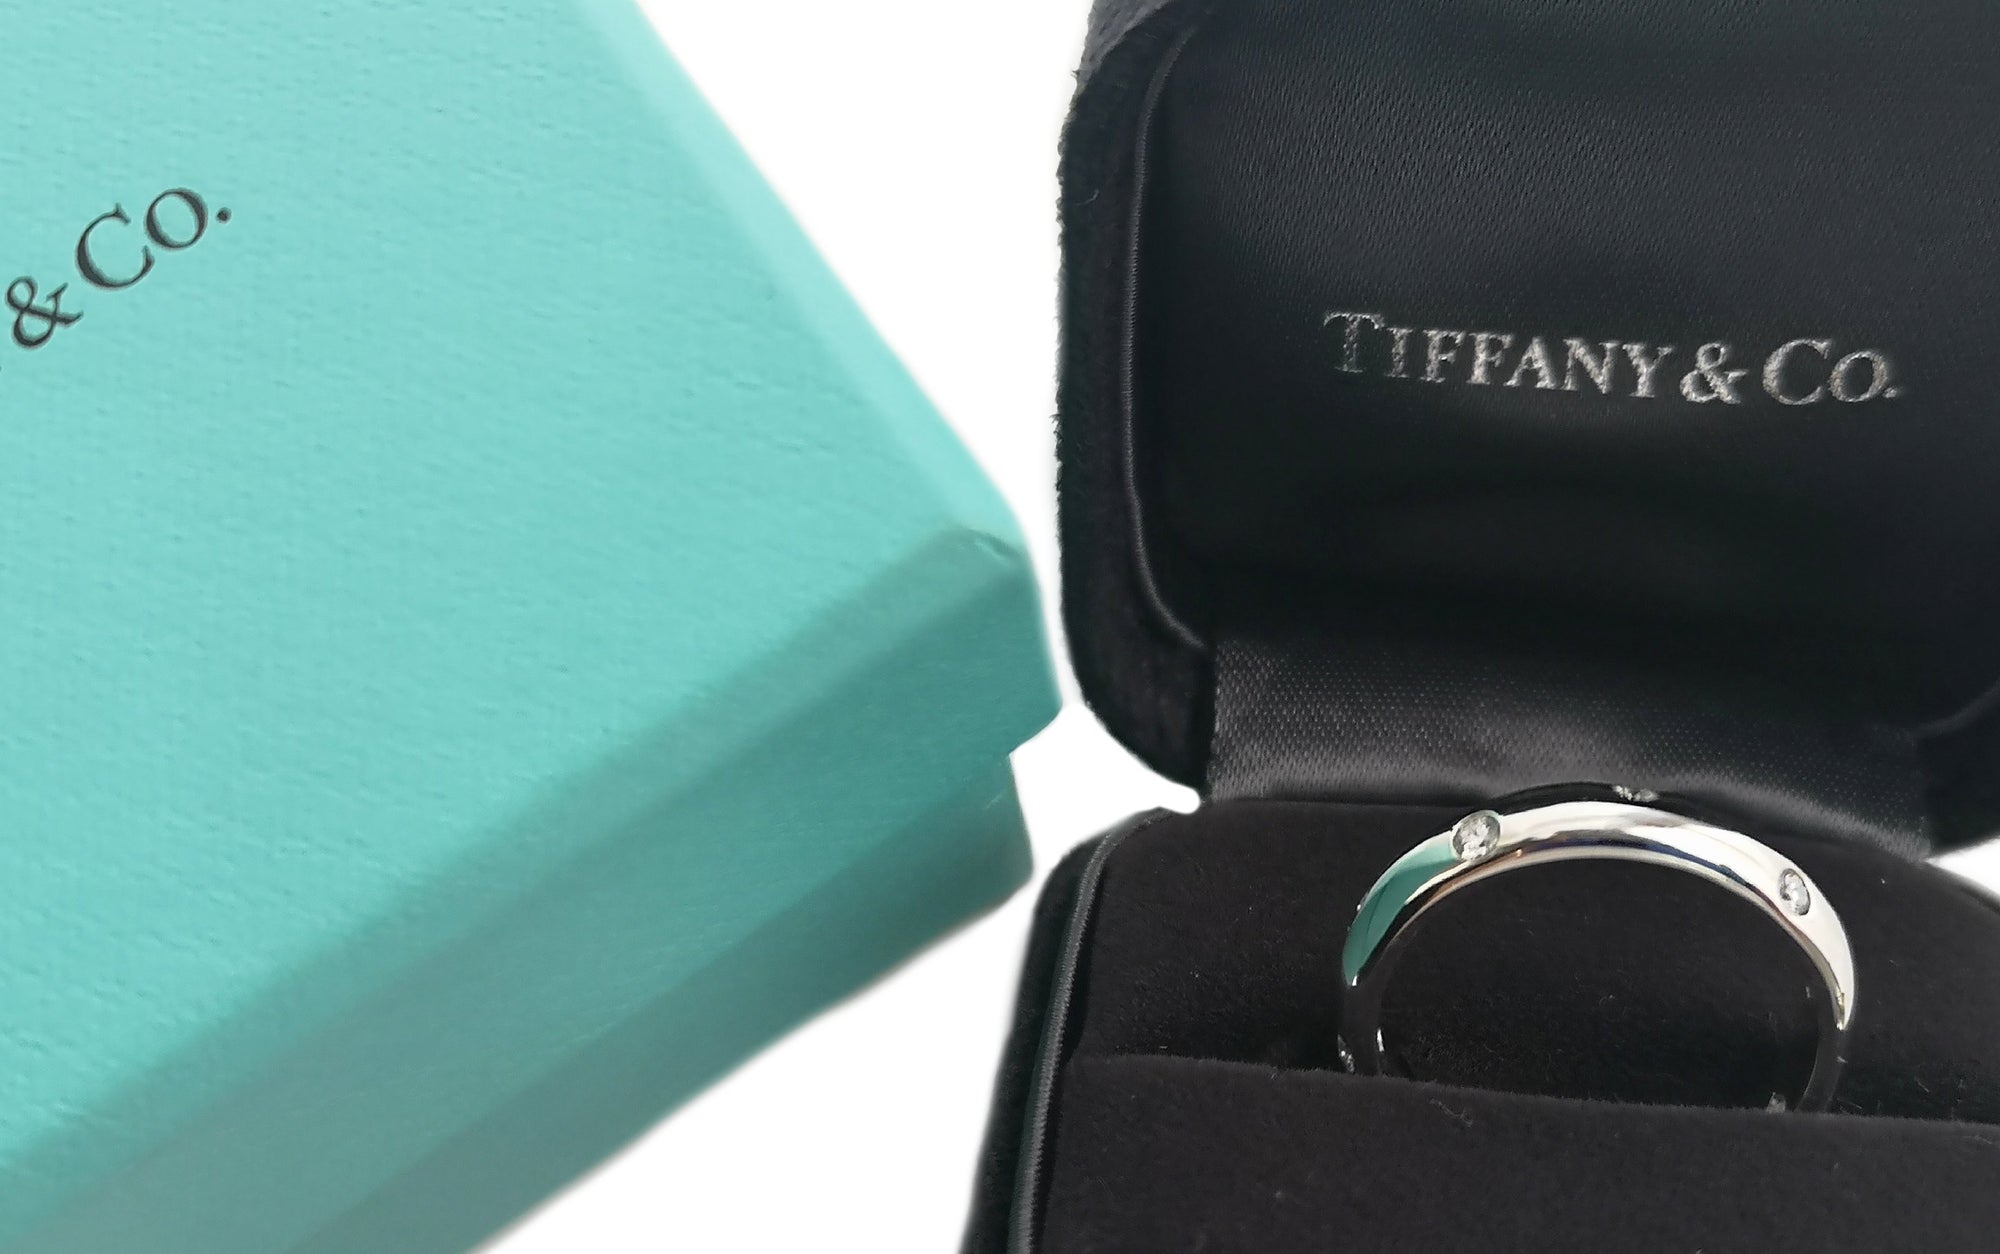 Elegant Tiffany & Co Sterling Silver 1837 Ring - Size 5.5